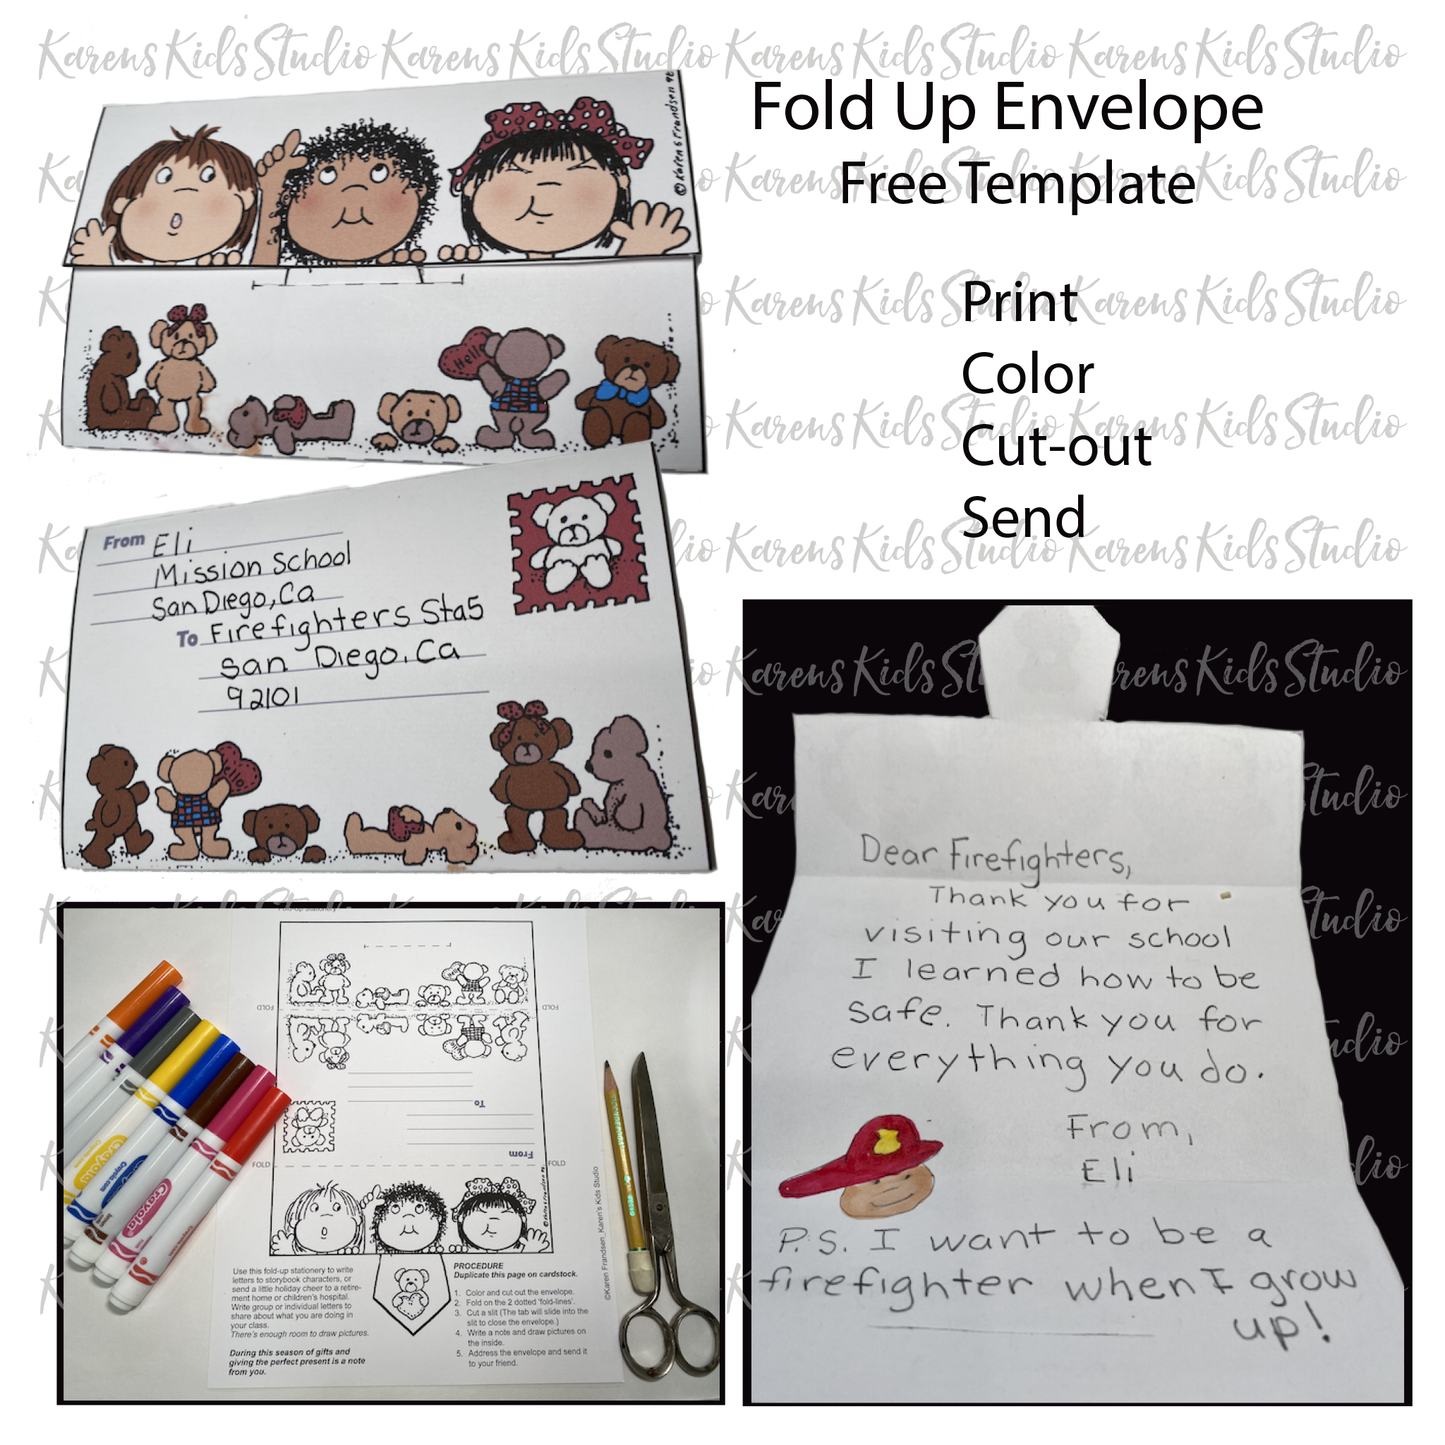 Fold Up Stationery Template (Karen's Kids Printables)